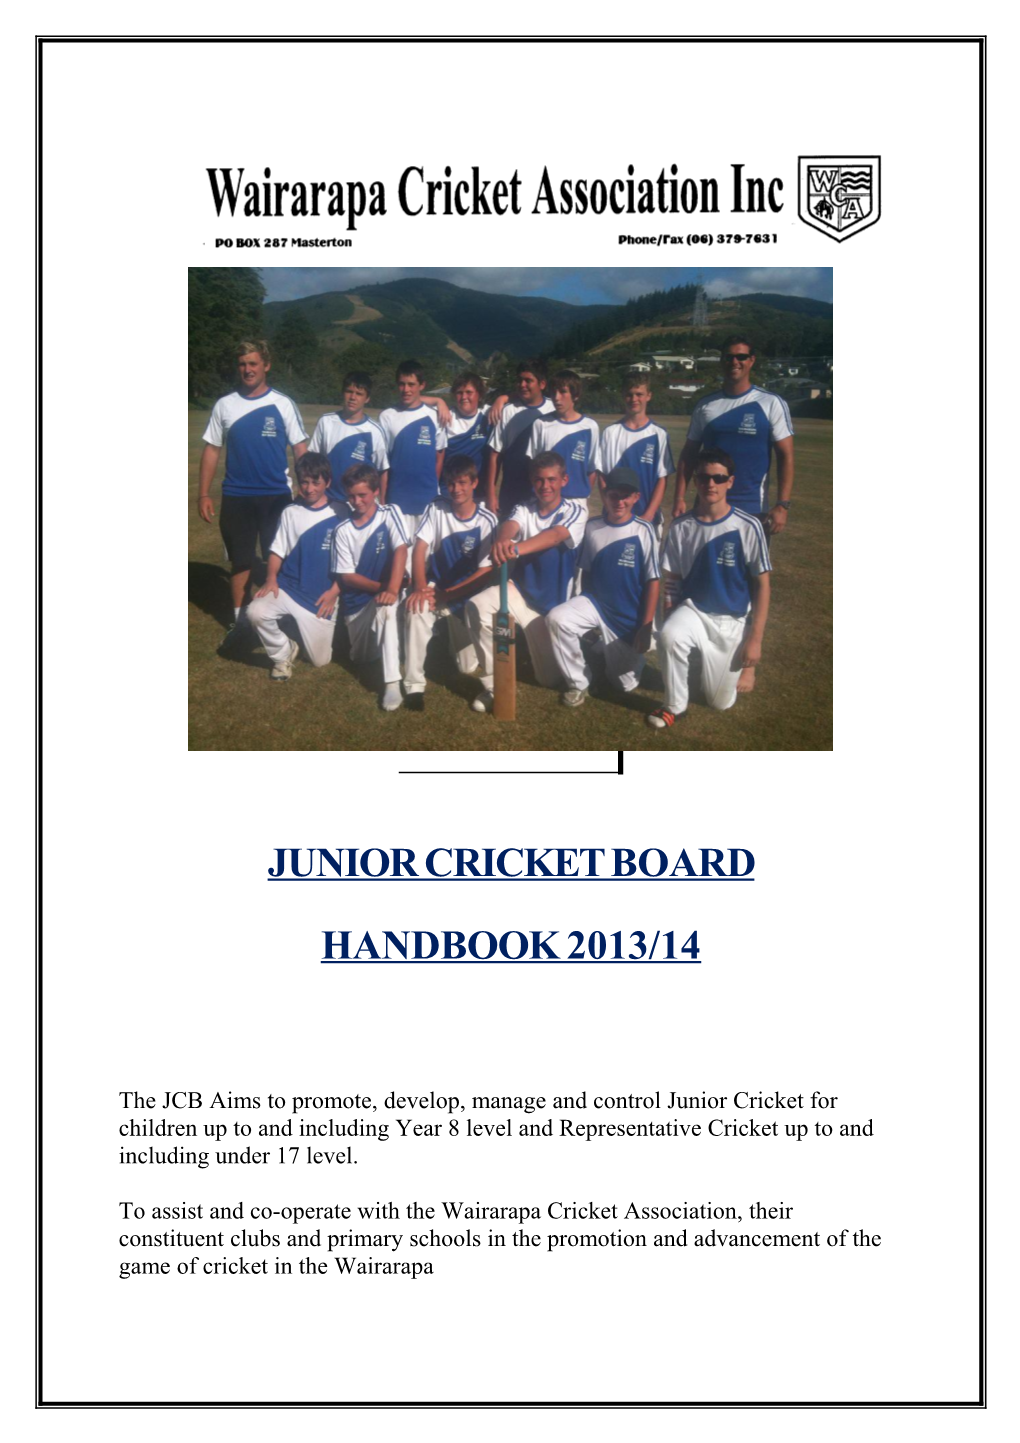 Facebook: Groups Wairarapa Junior Cricket